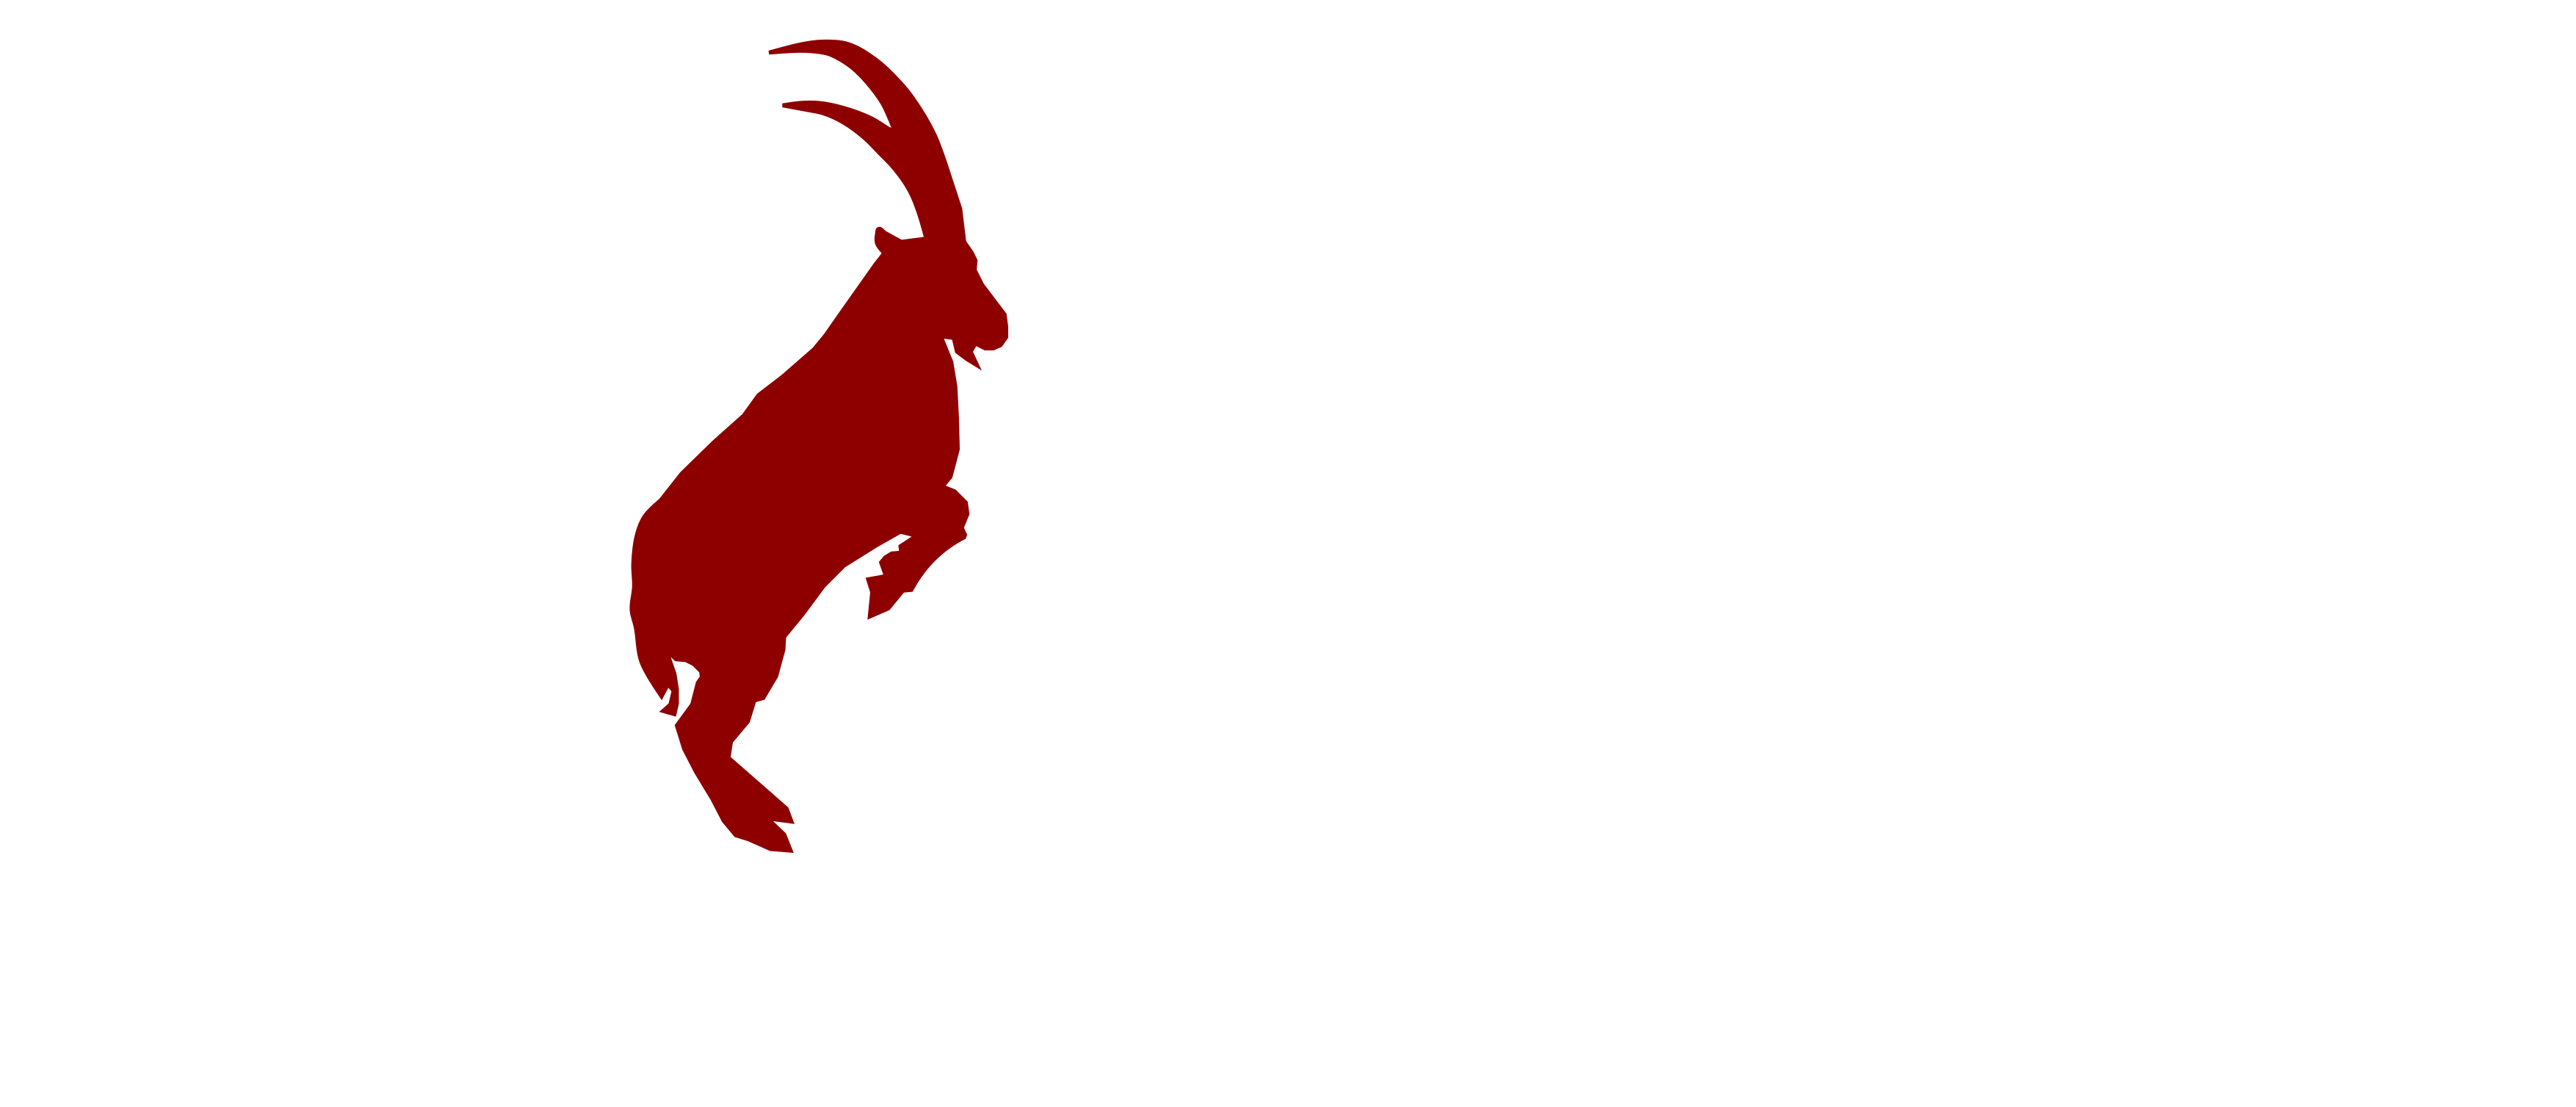 Capricorn Concept GmbH